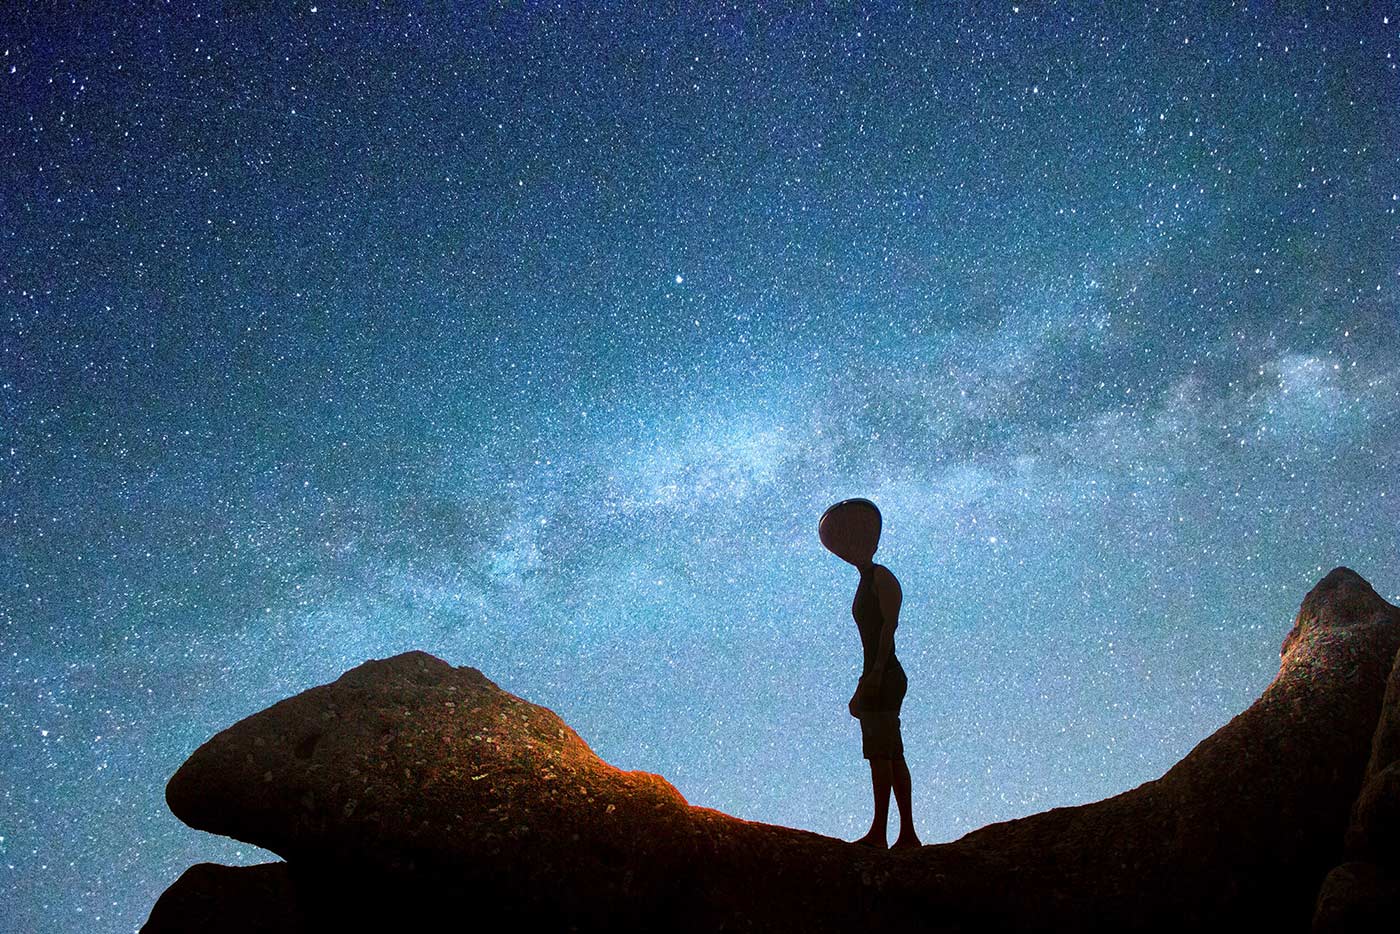 Alien figure looking at the sky